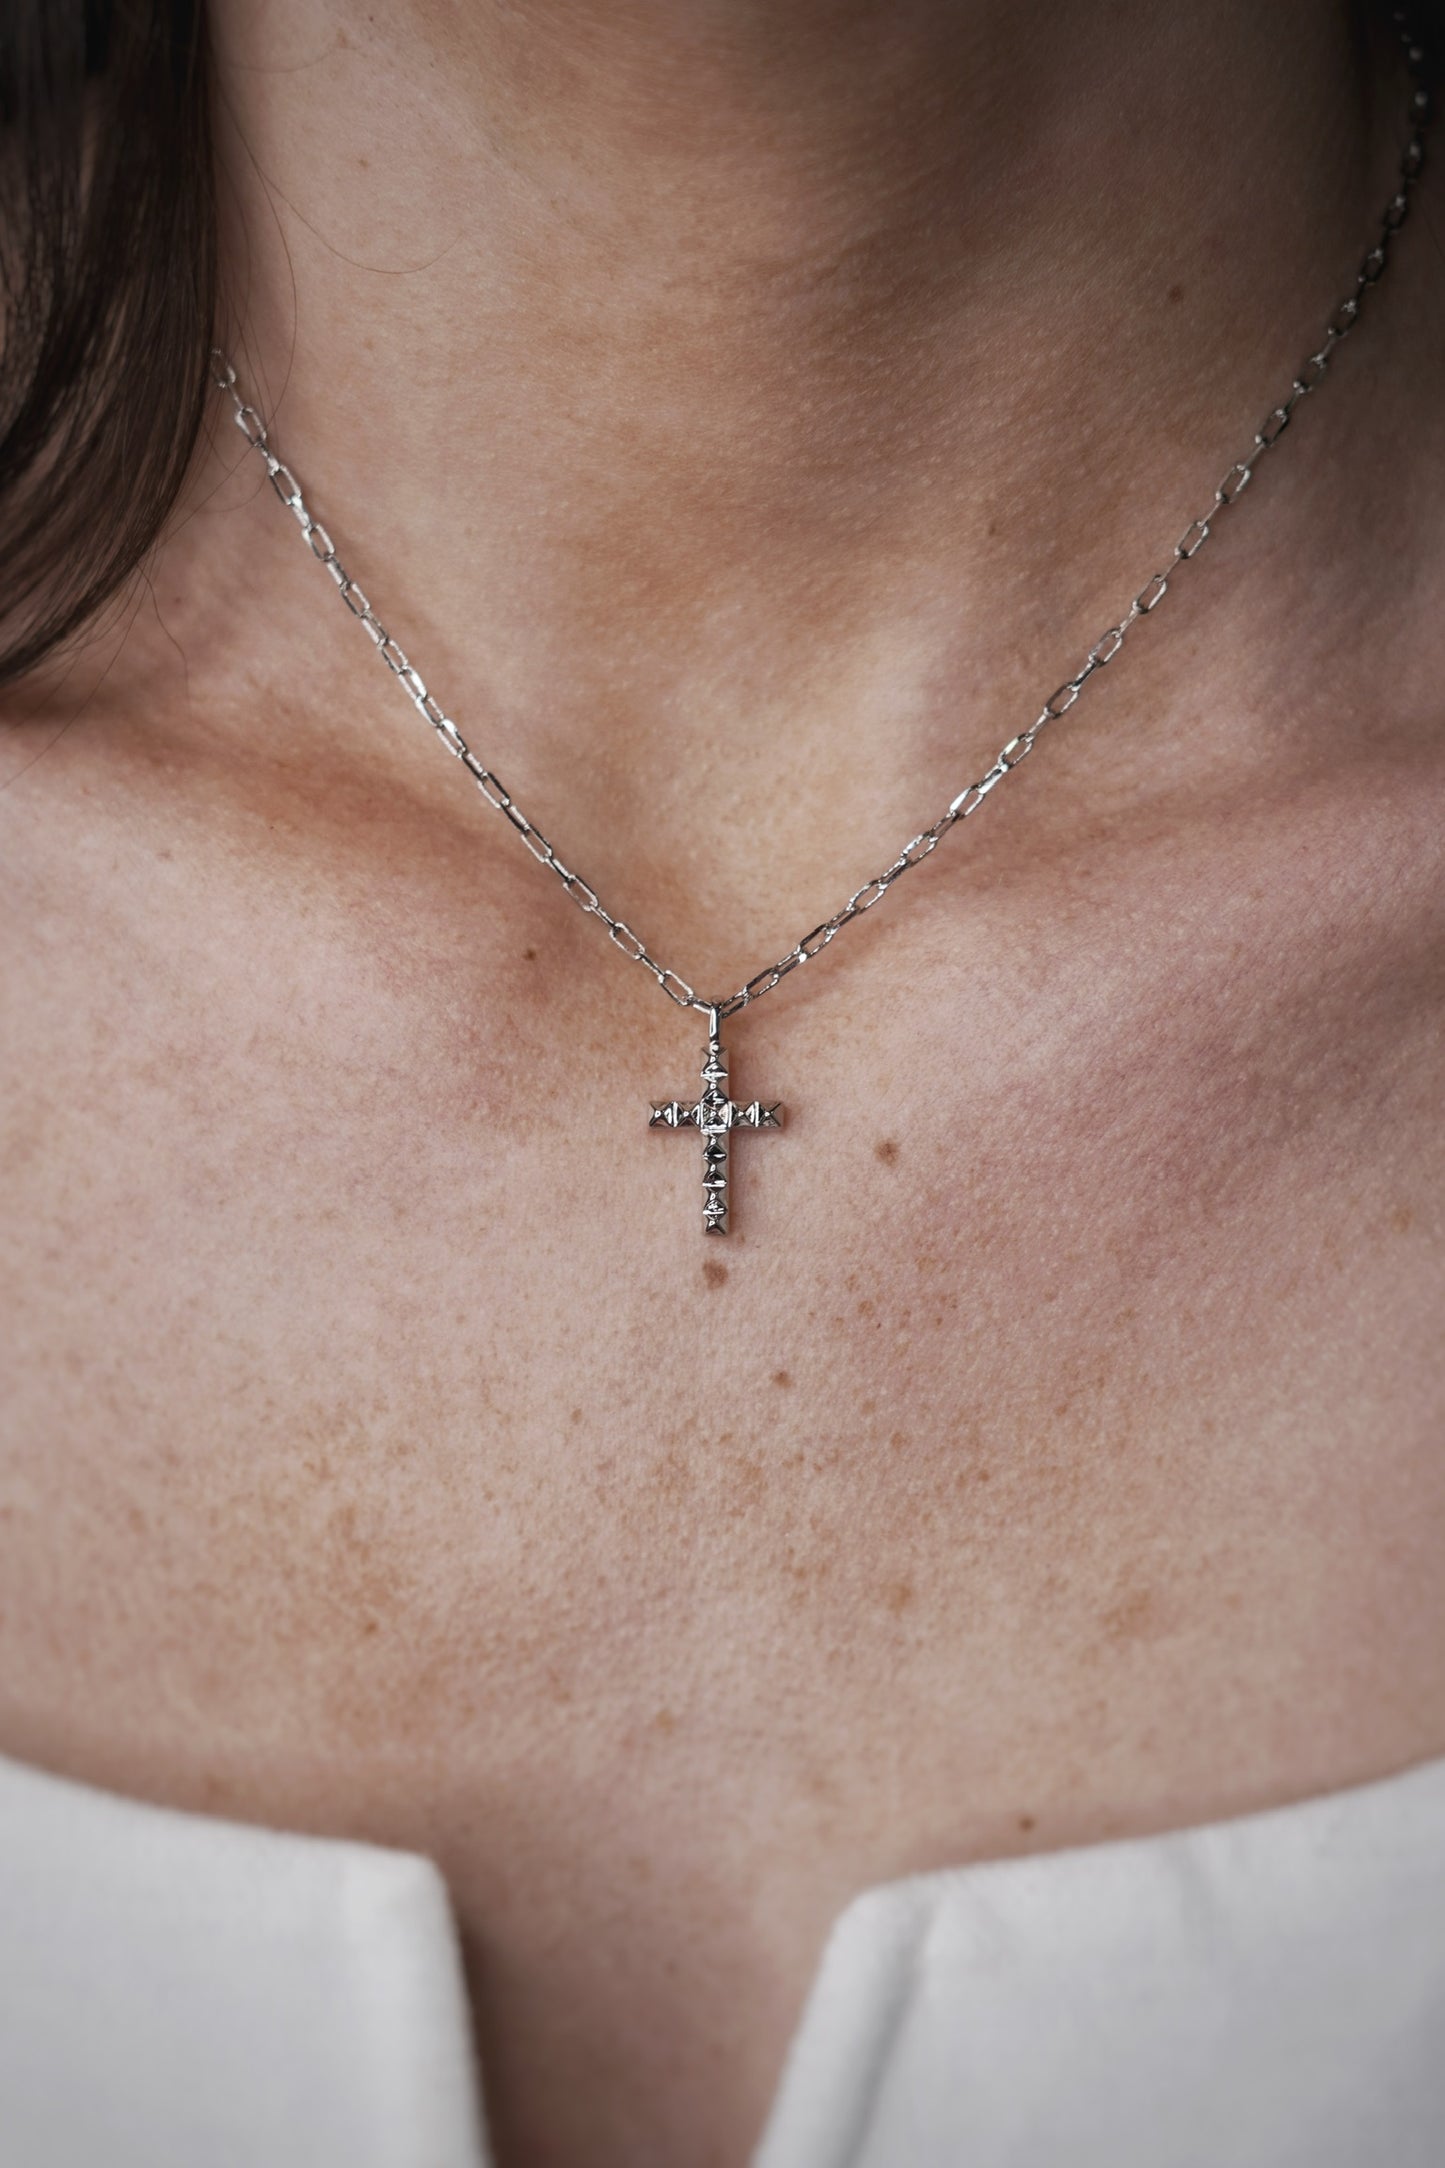 Kendra Scott Jada Cross Pendant Necklace